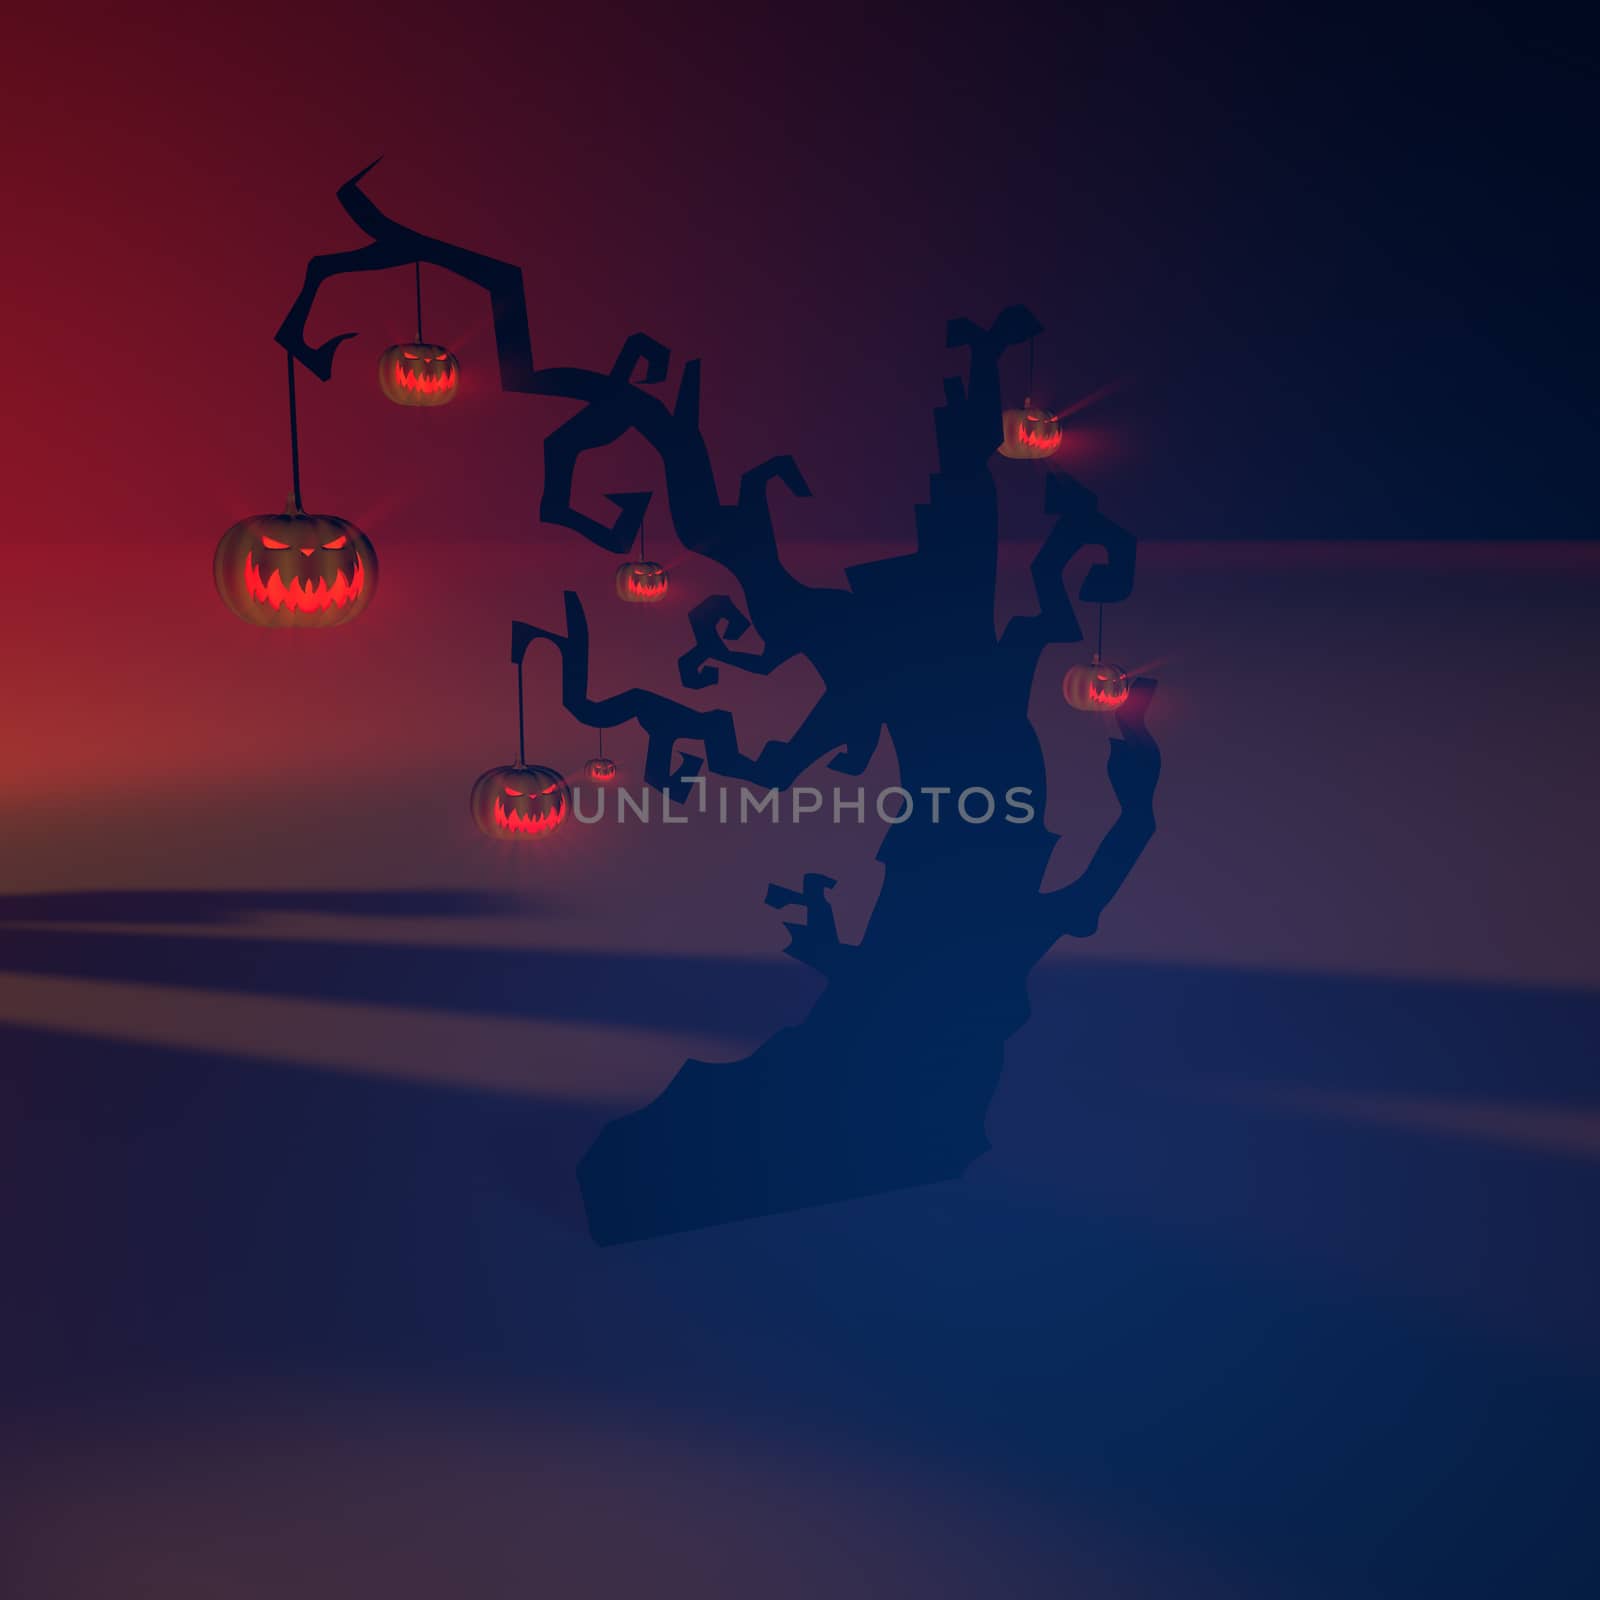 Happy Halloween background